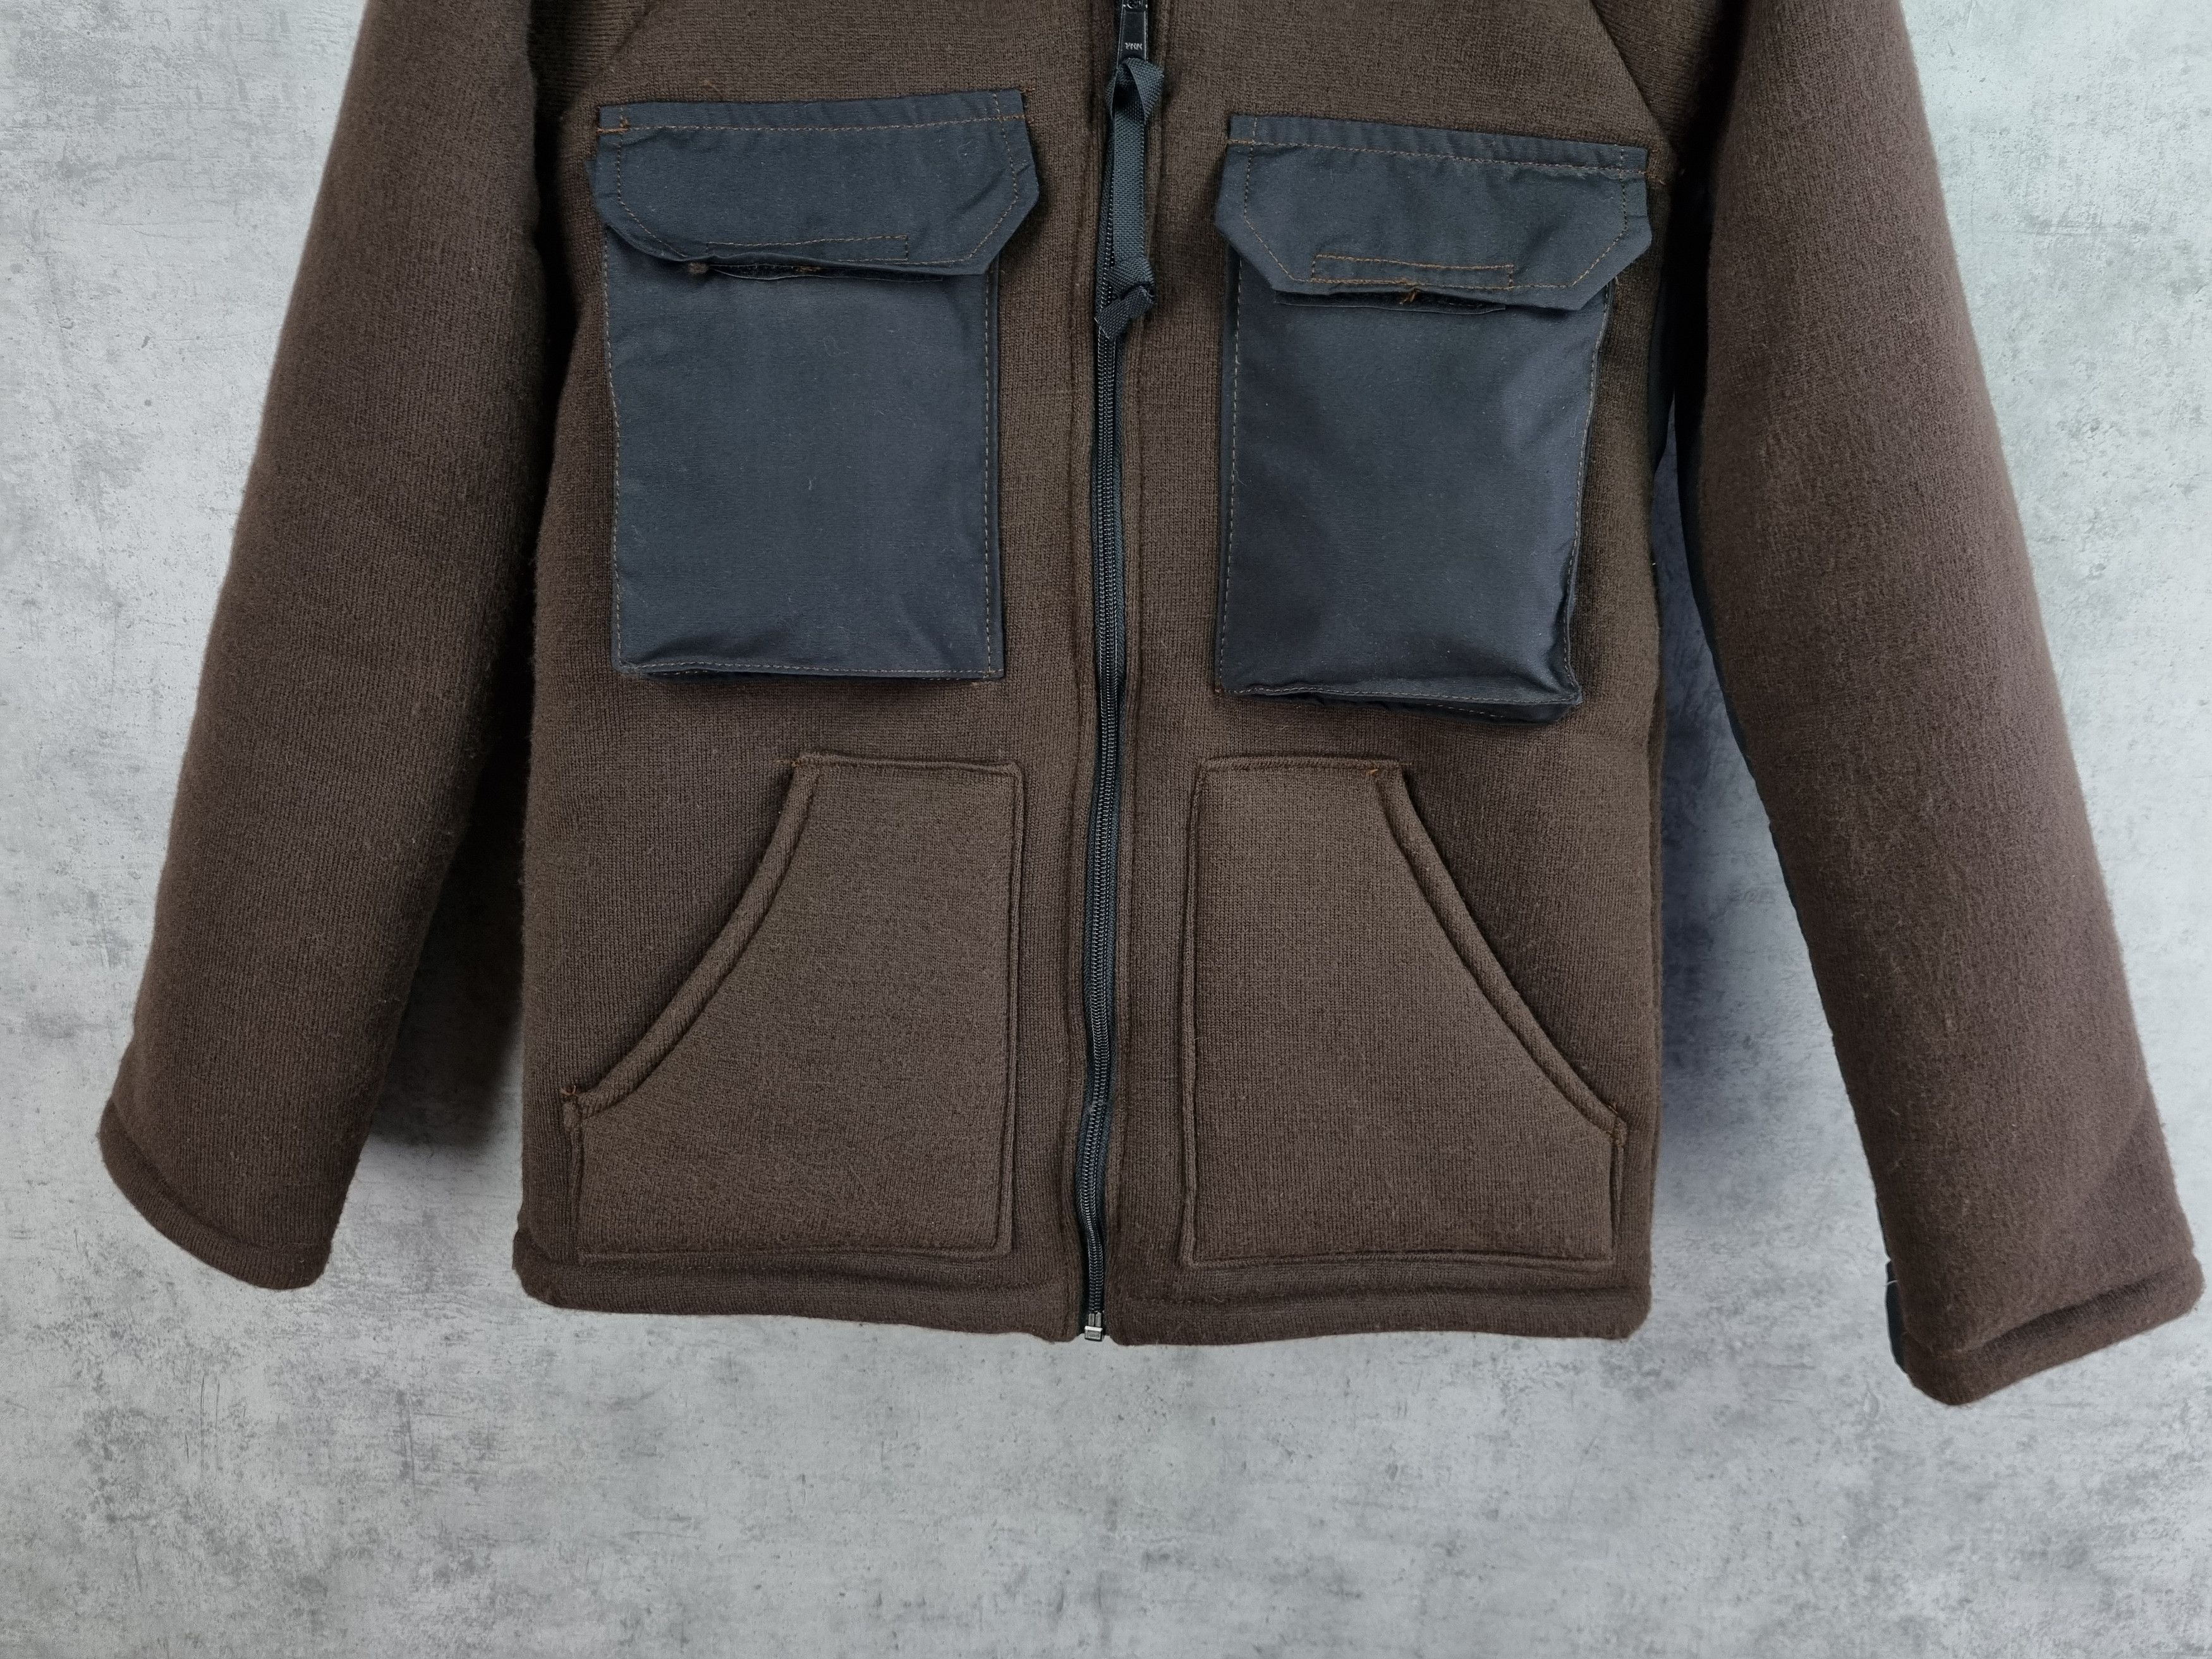 Vintage 90s Vintage US ARMY Fleece Winter Jacket PATAGONIA Size US S / EU 44-46 / 1 - 5 Thumbnail